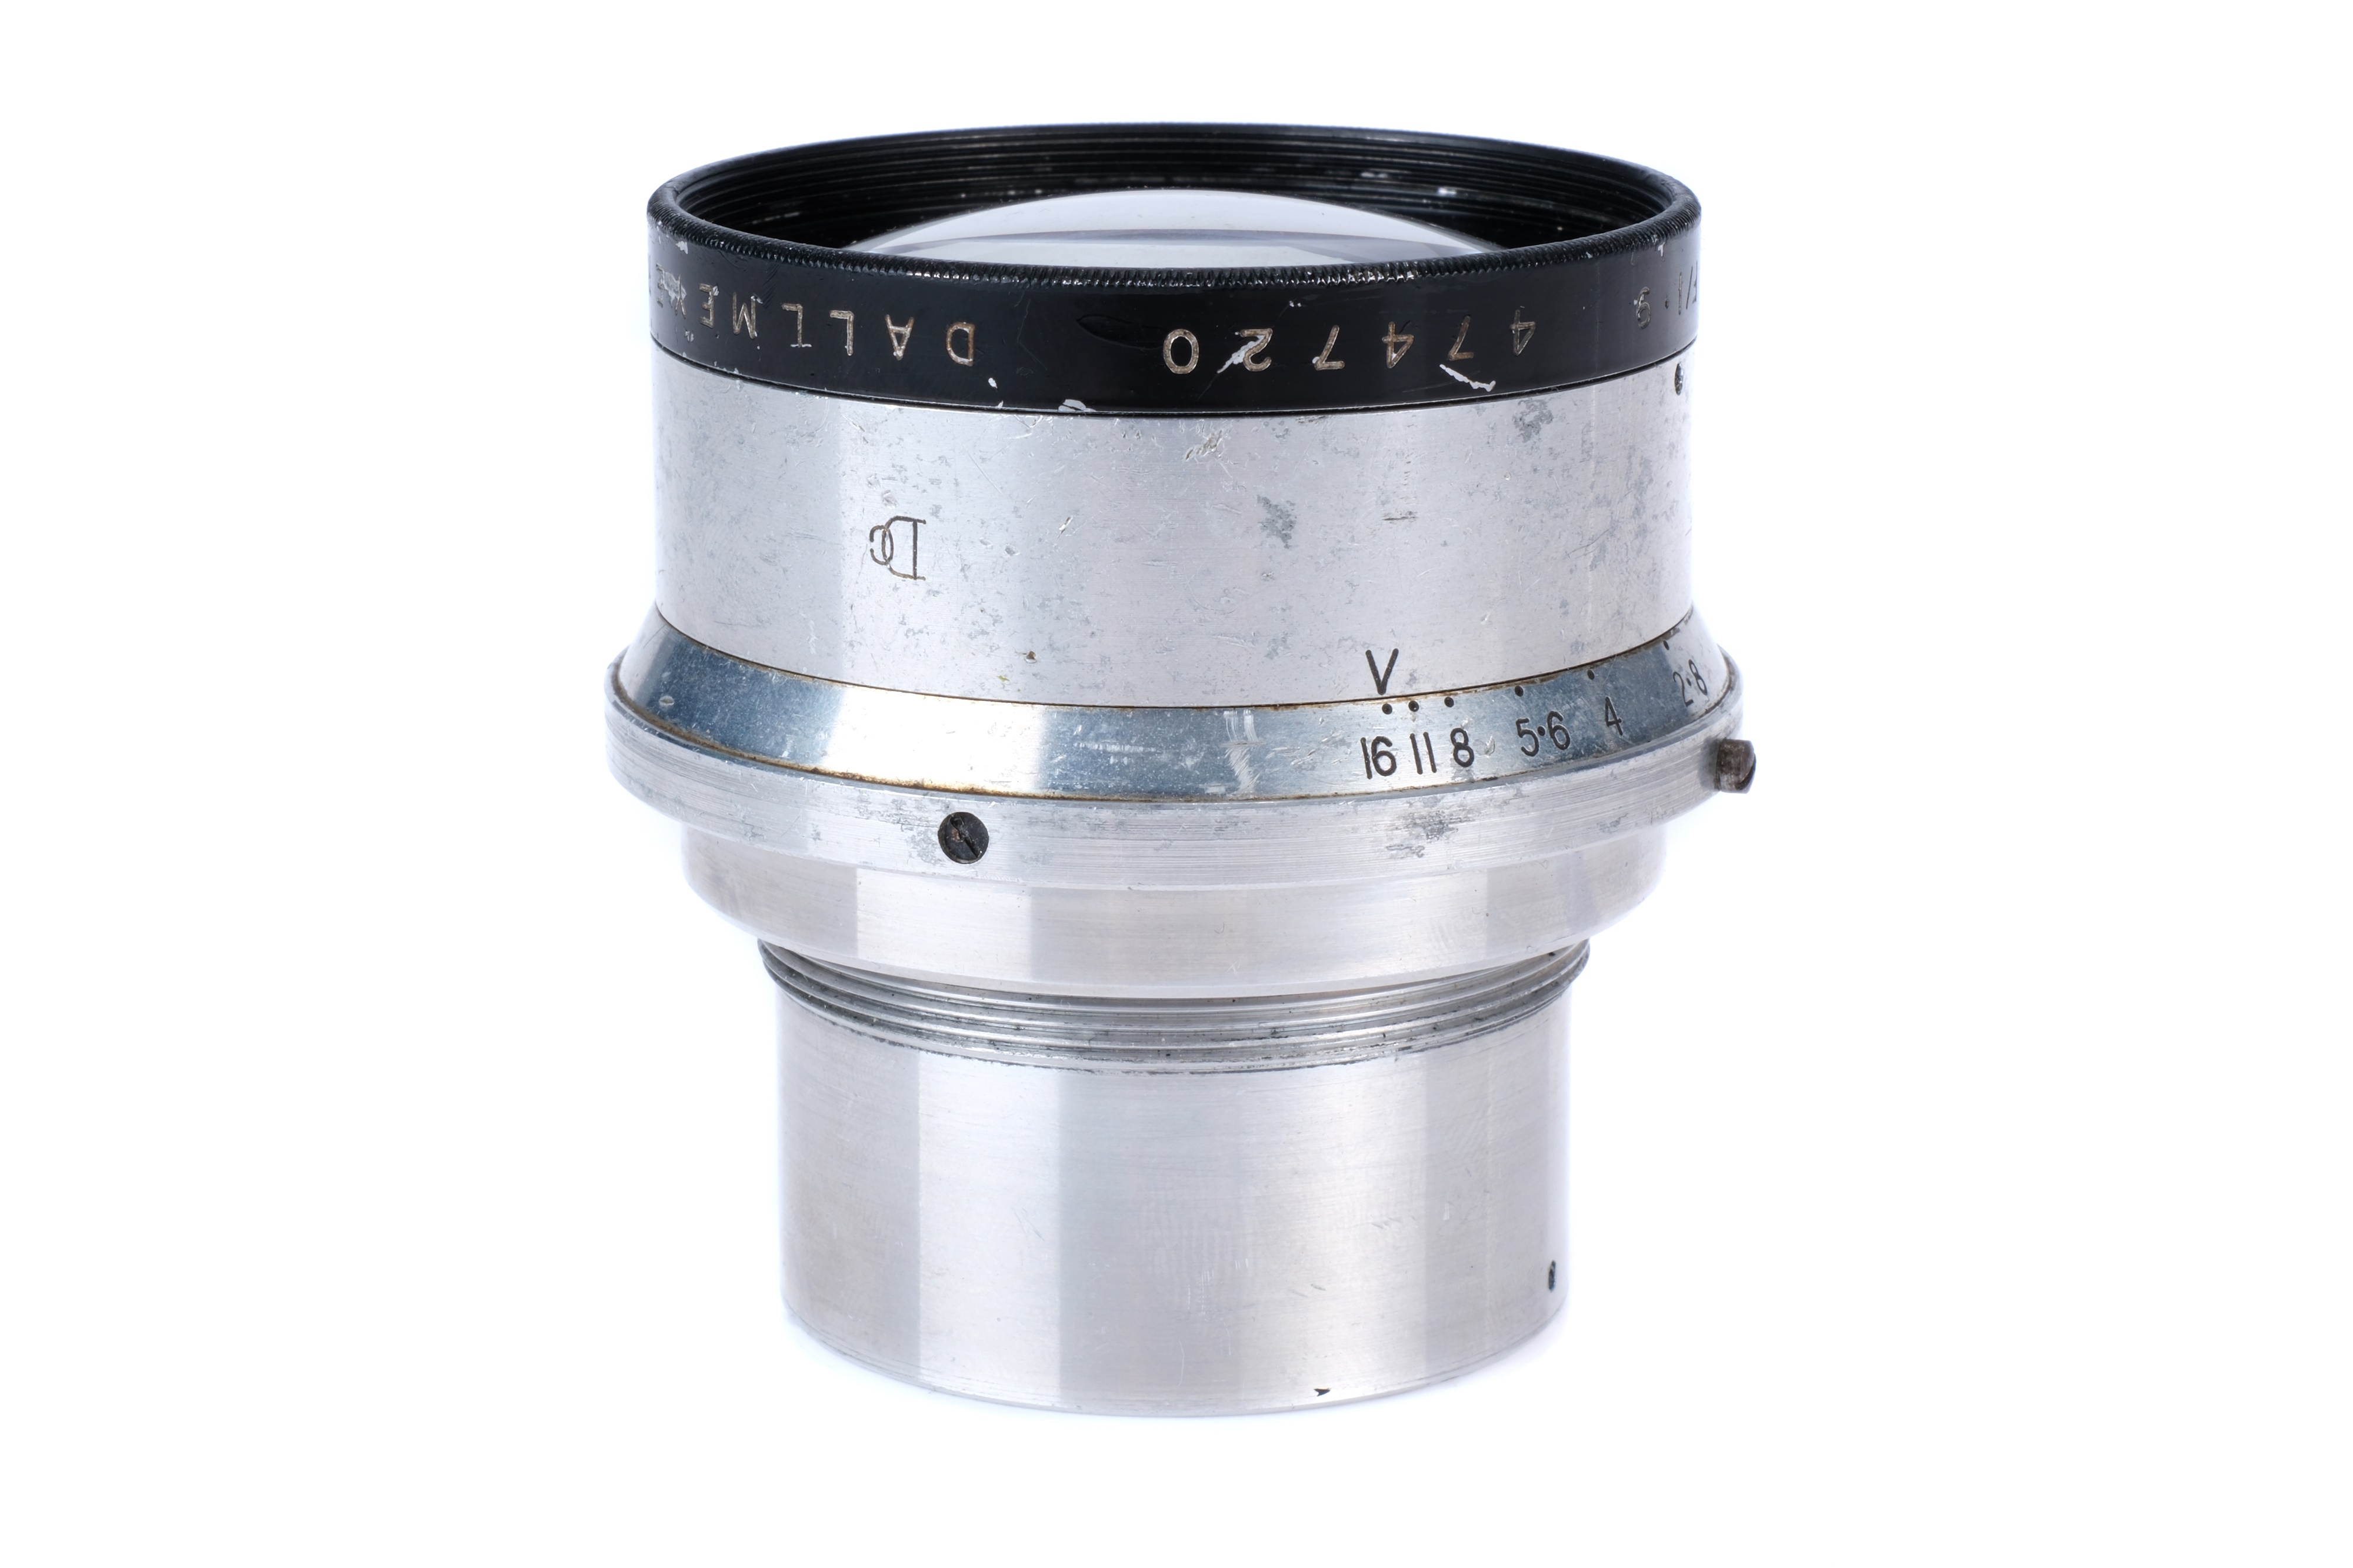 A J.H. Dallmeyer Super Six f/1.9 4" Lens,